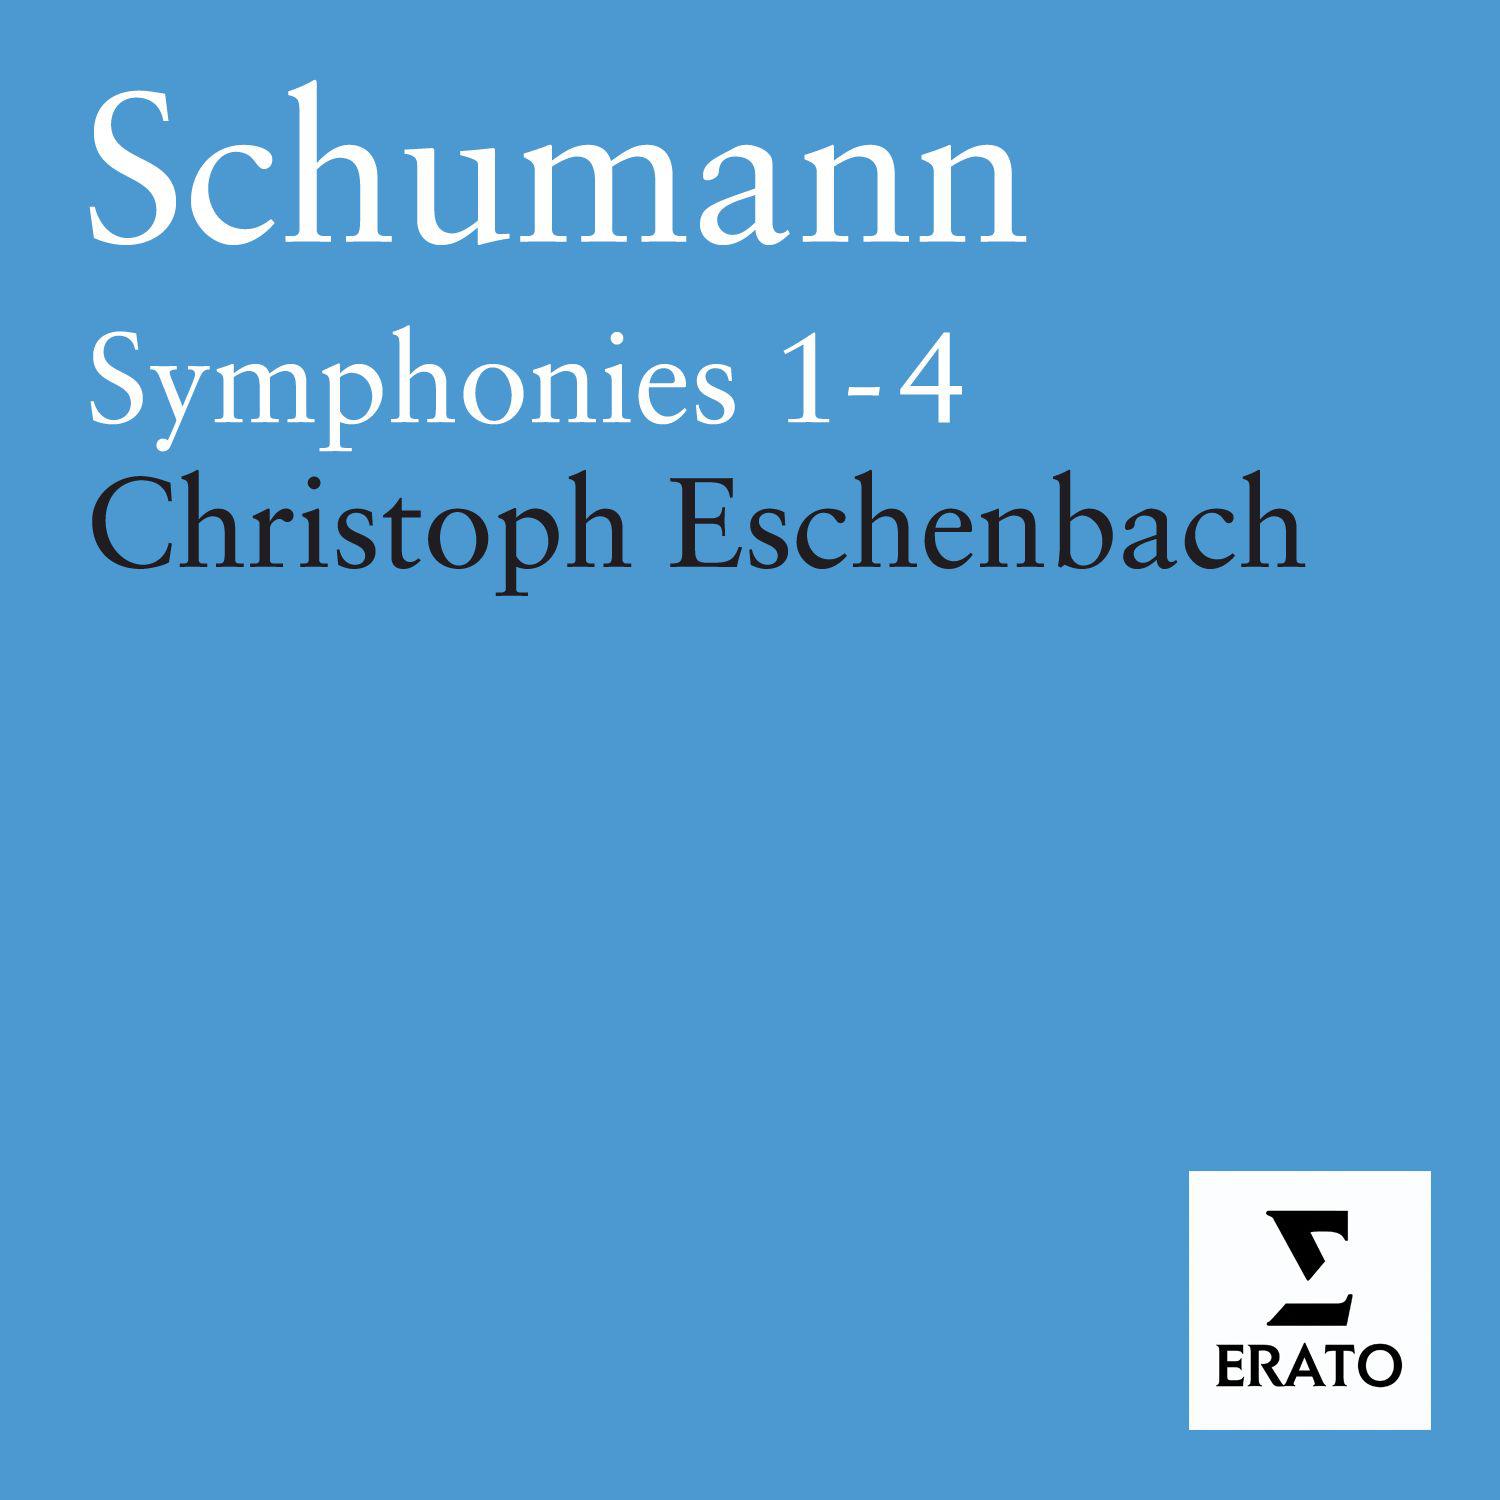 Symphony No. 4 in D Minor, Op. 120: IV. Langsam - Lebhaft